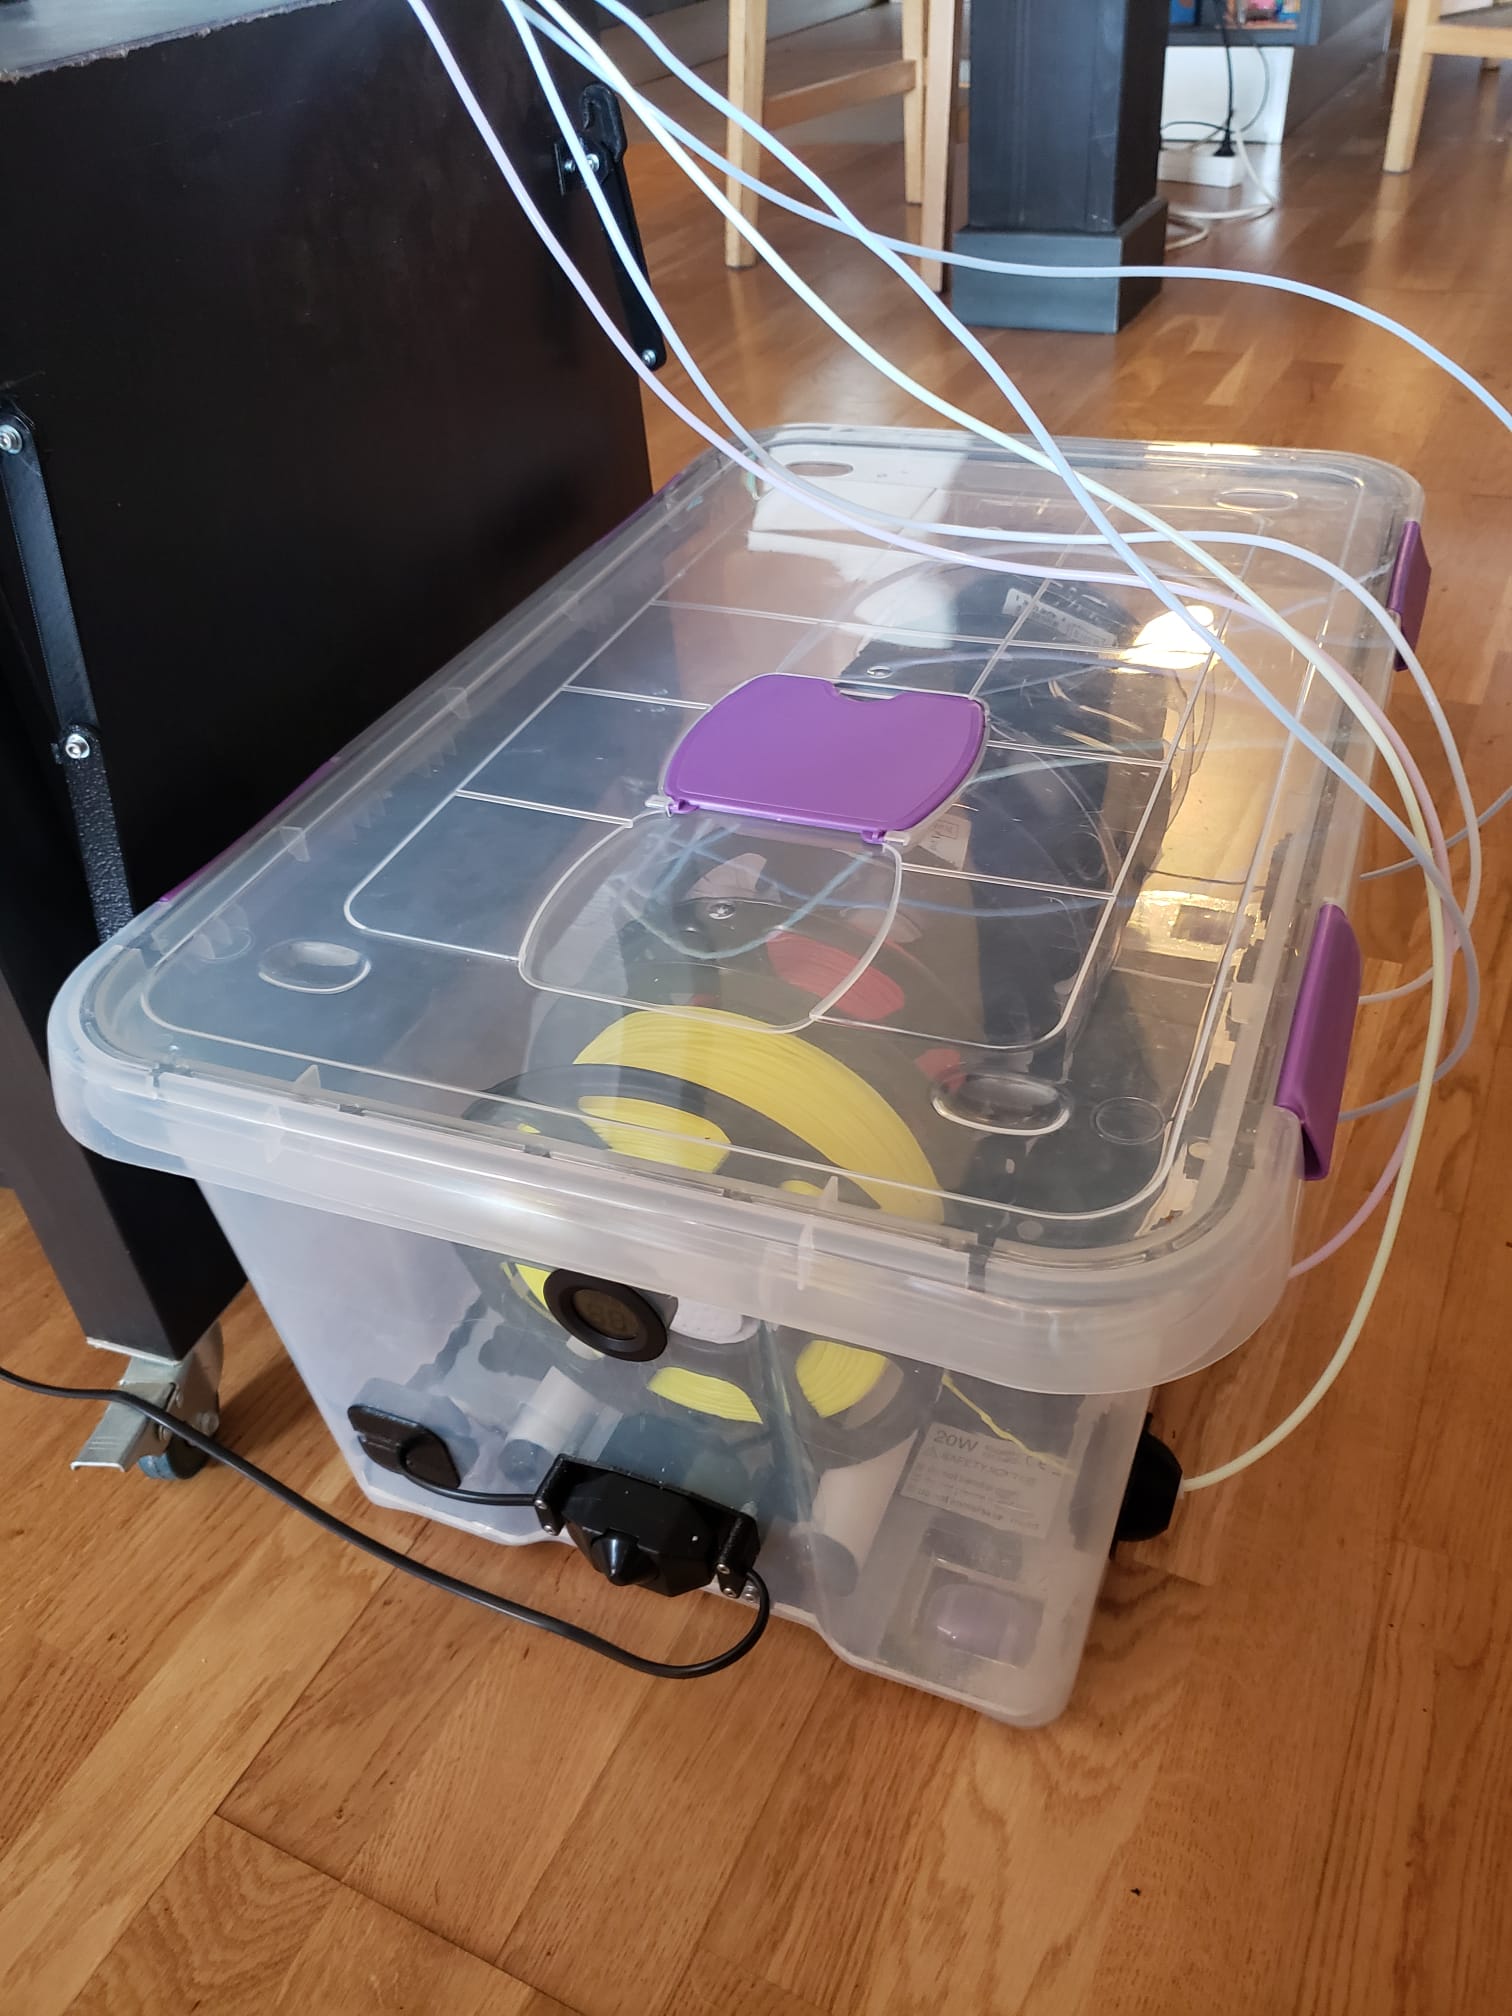 The ultimate MMU2 filament drybox